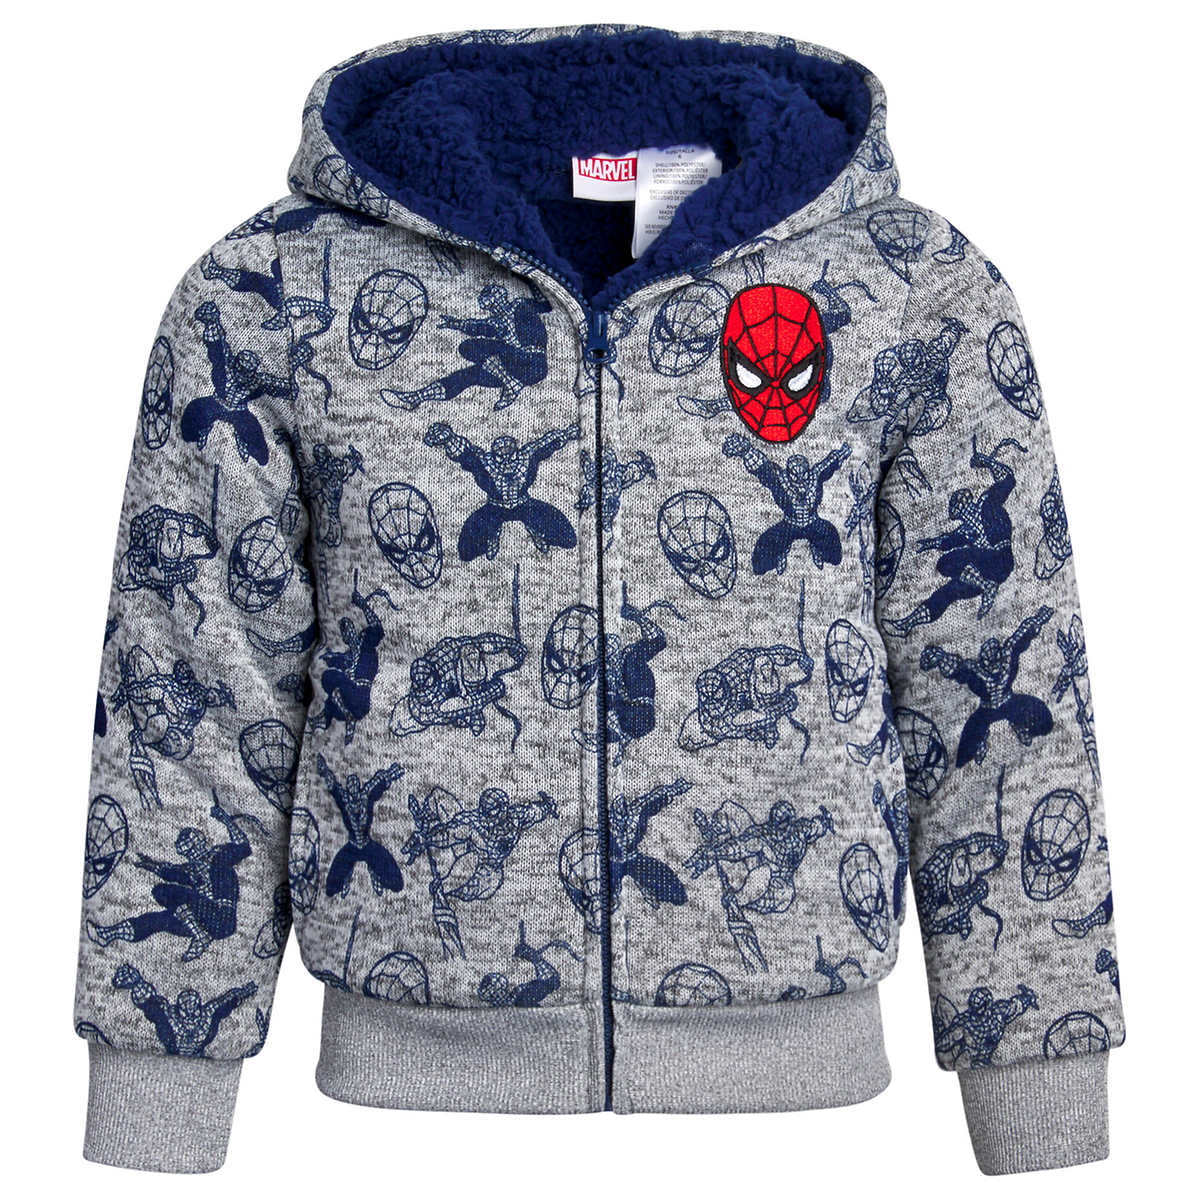 Marvel Spider-Man Boys Blue & Gray Fleece Jacket Size 2T 3T 4T 